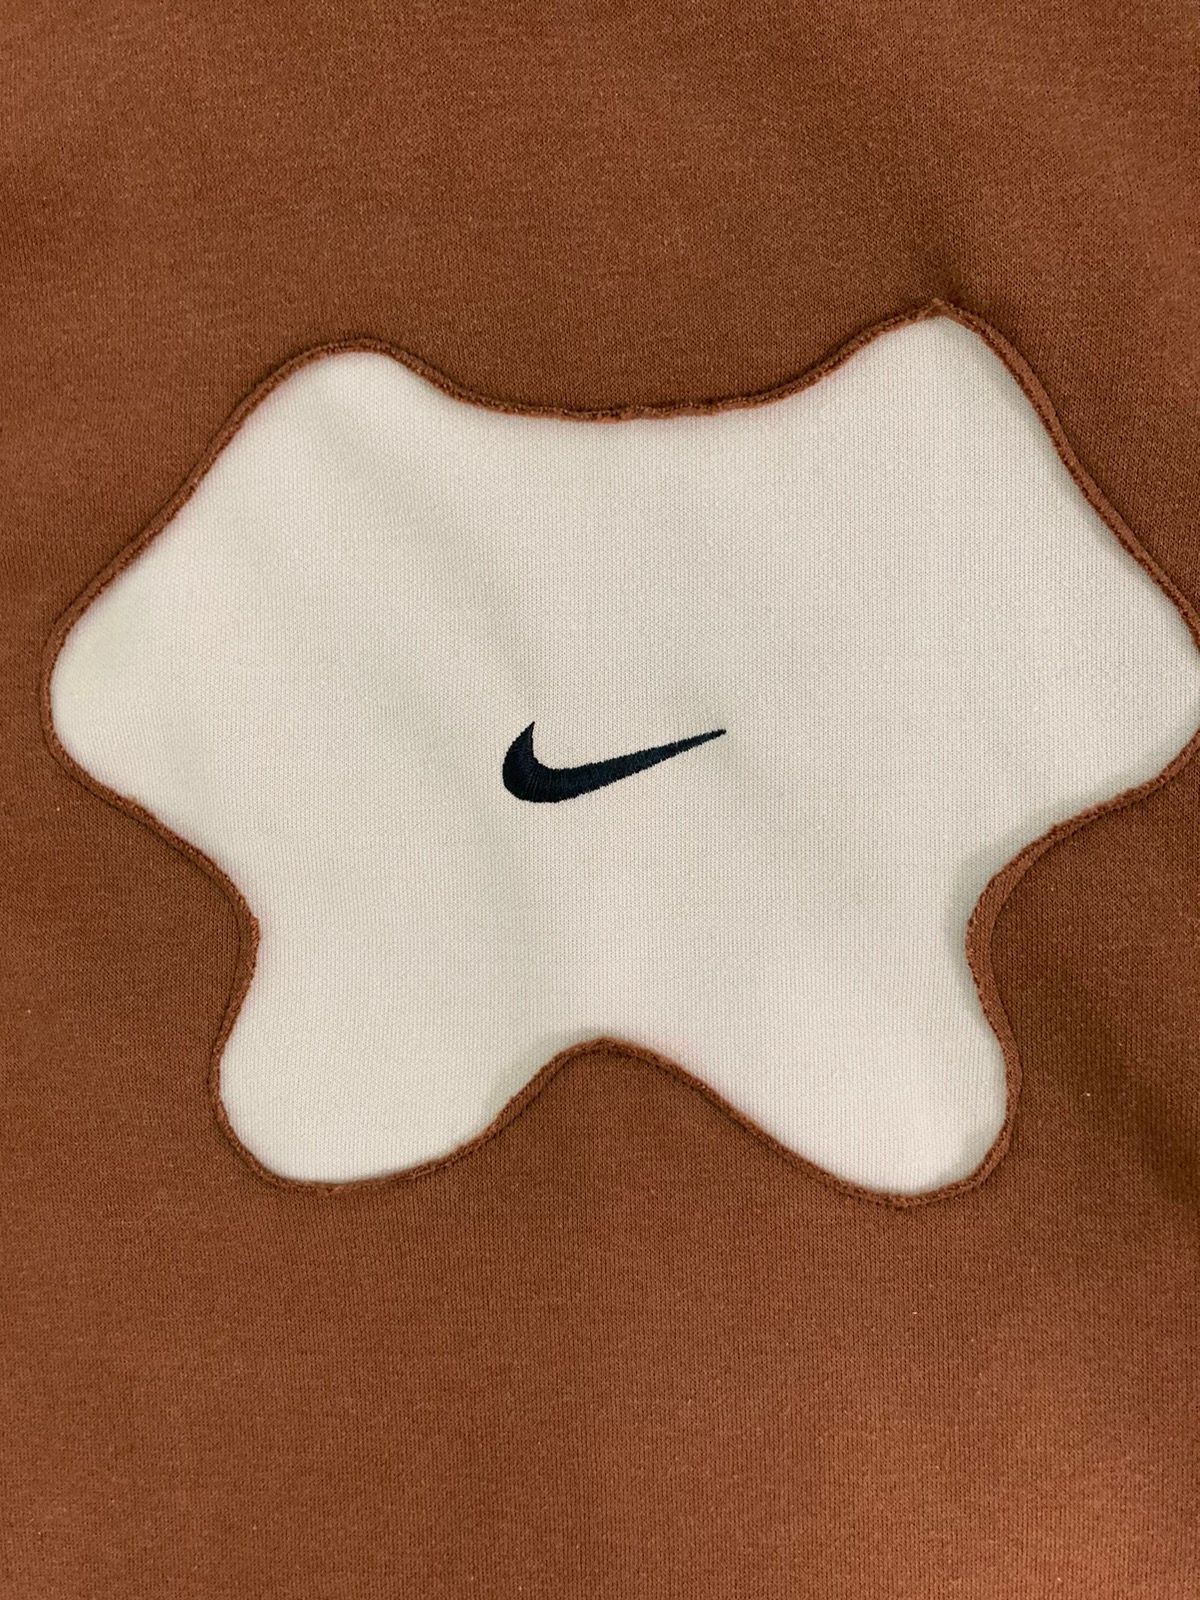 Nike nike vintage sweatshirt brown beige center logo custom made Size US L / EU 52-54 / 3 - 3 Thumbnail